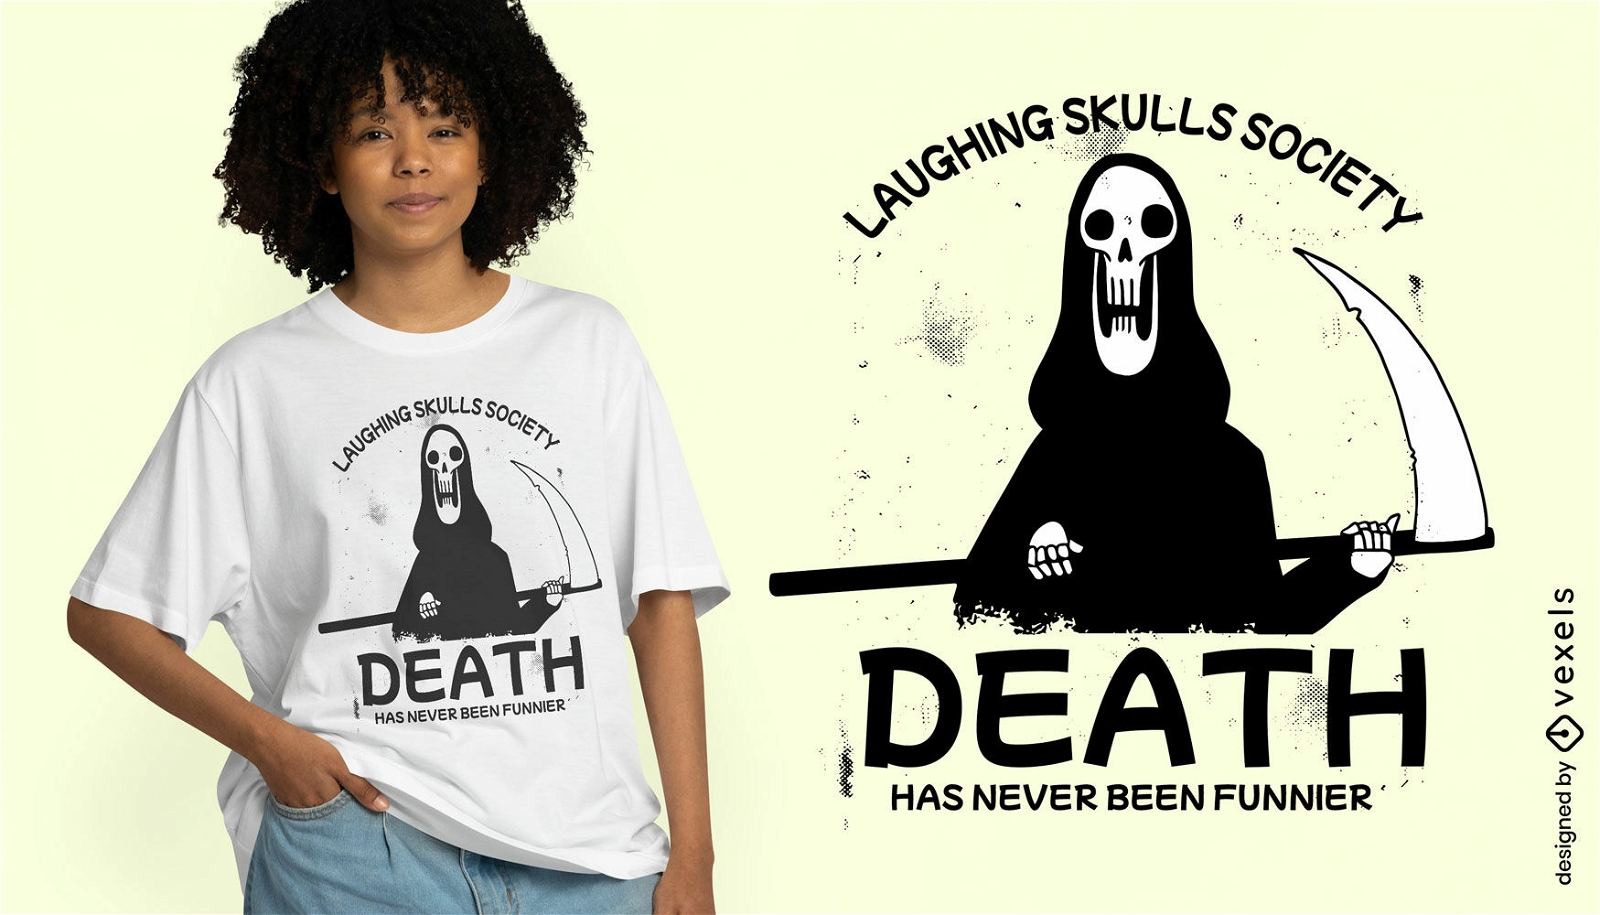 Laughing skulls society t-shirt design